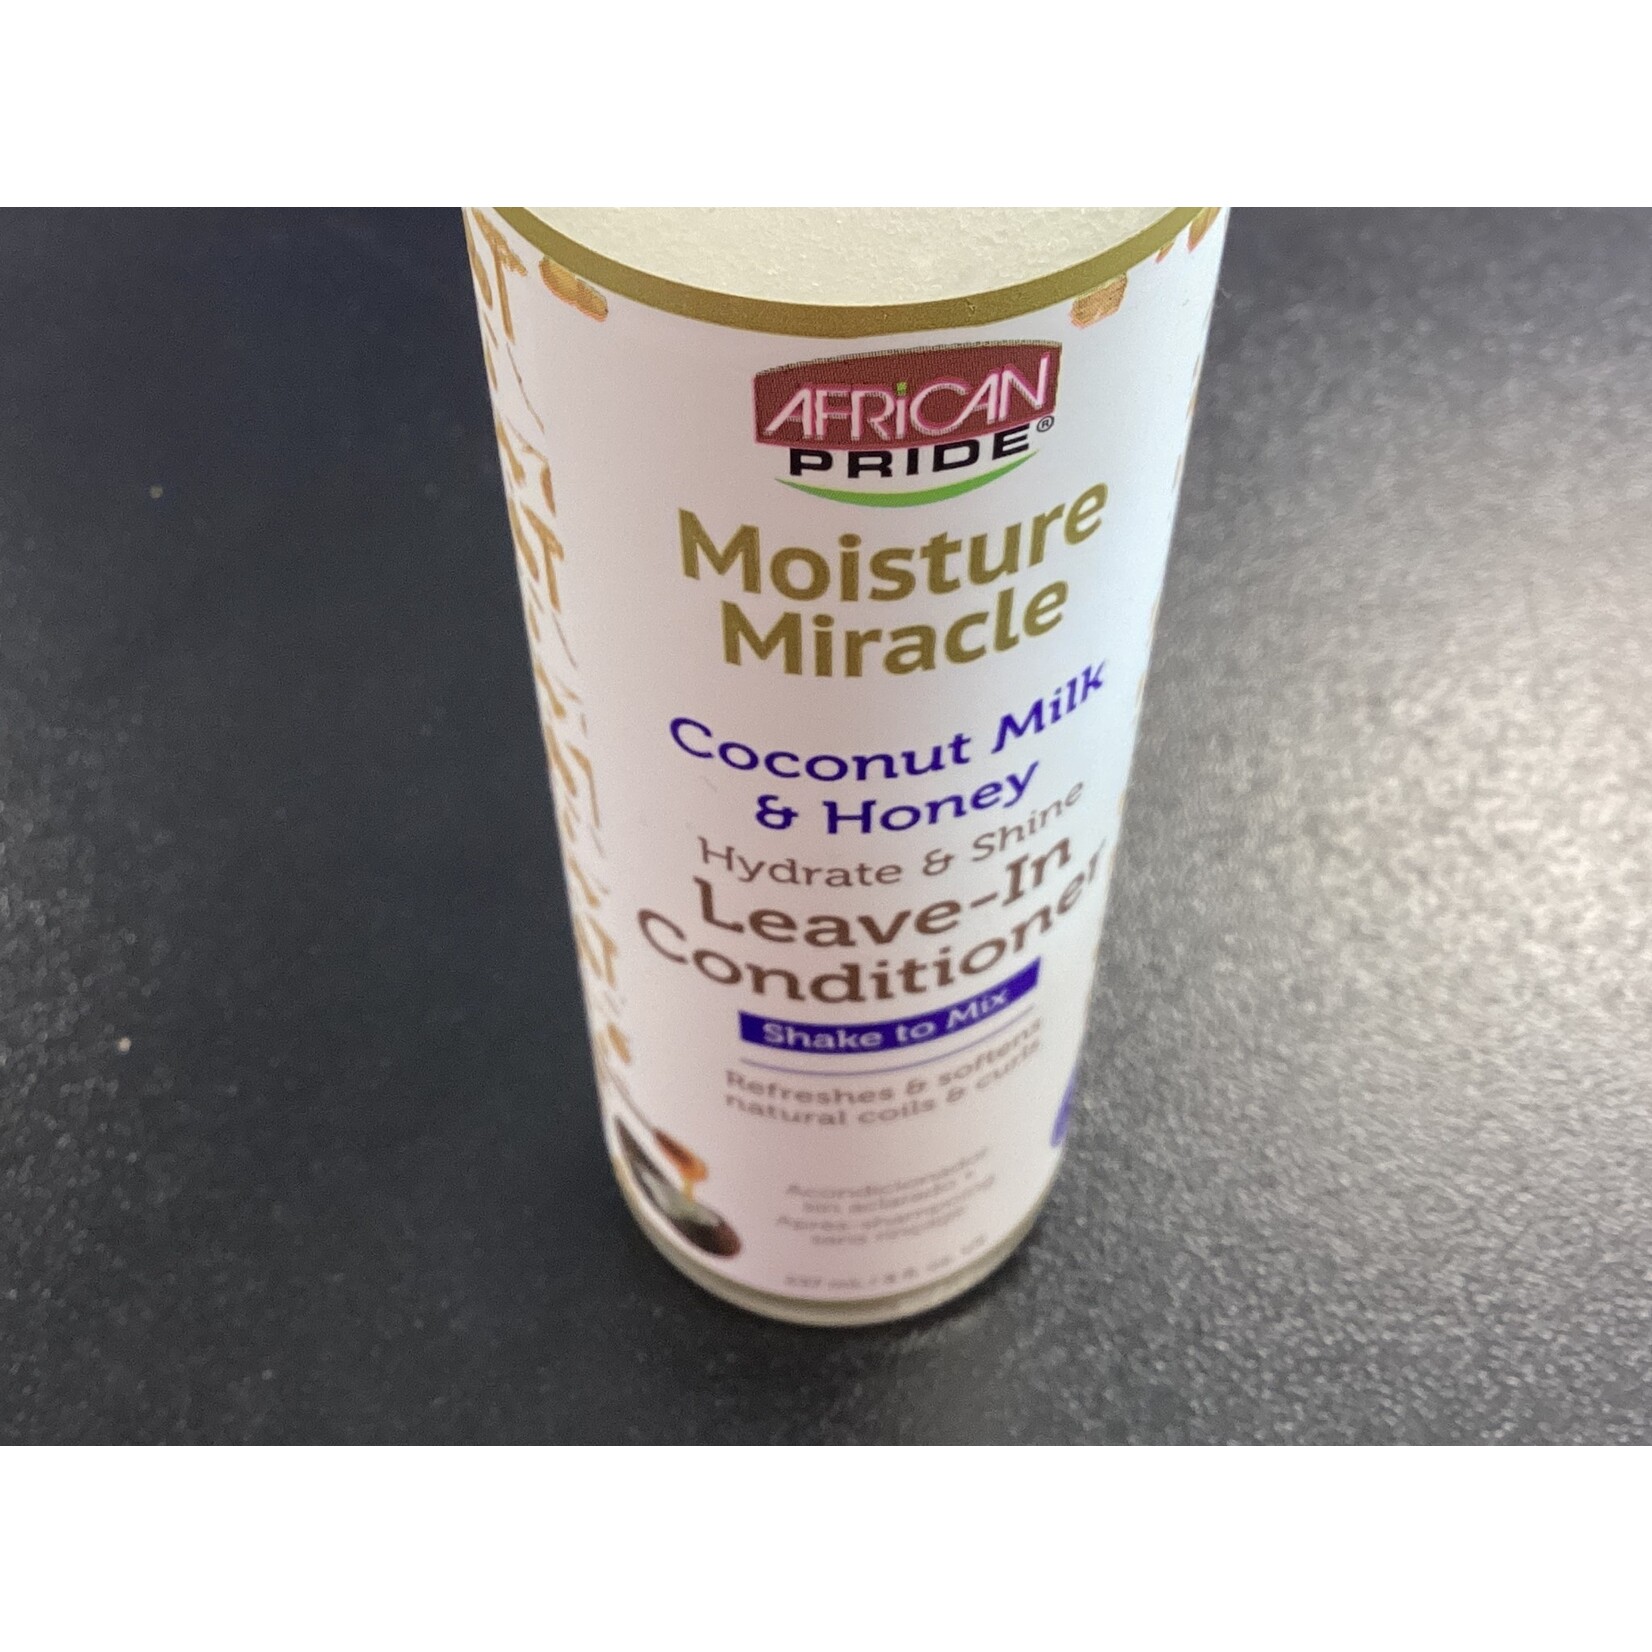 African Pride African Pride Moisture Miracle Coconut Milk & Honey Leave-in Conditioner 8 oz